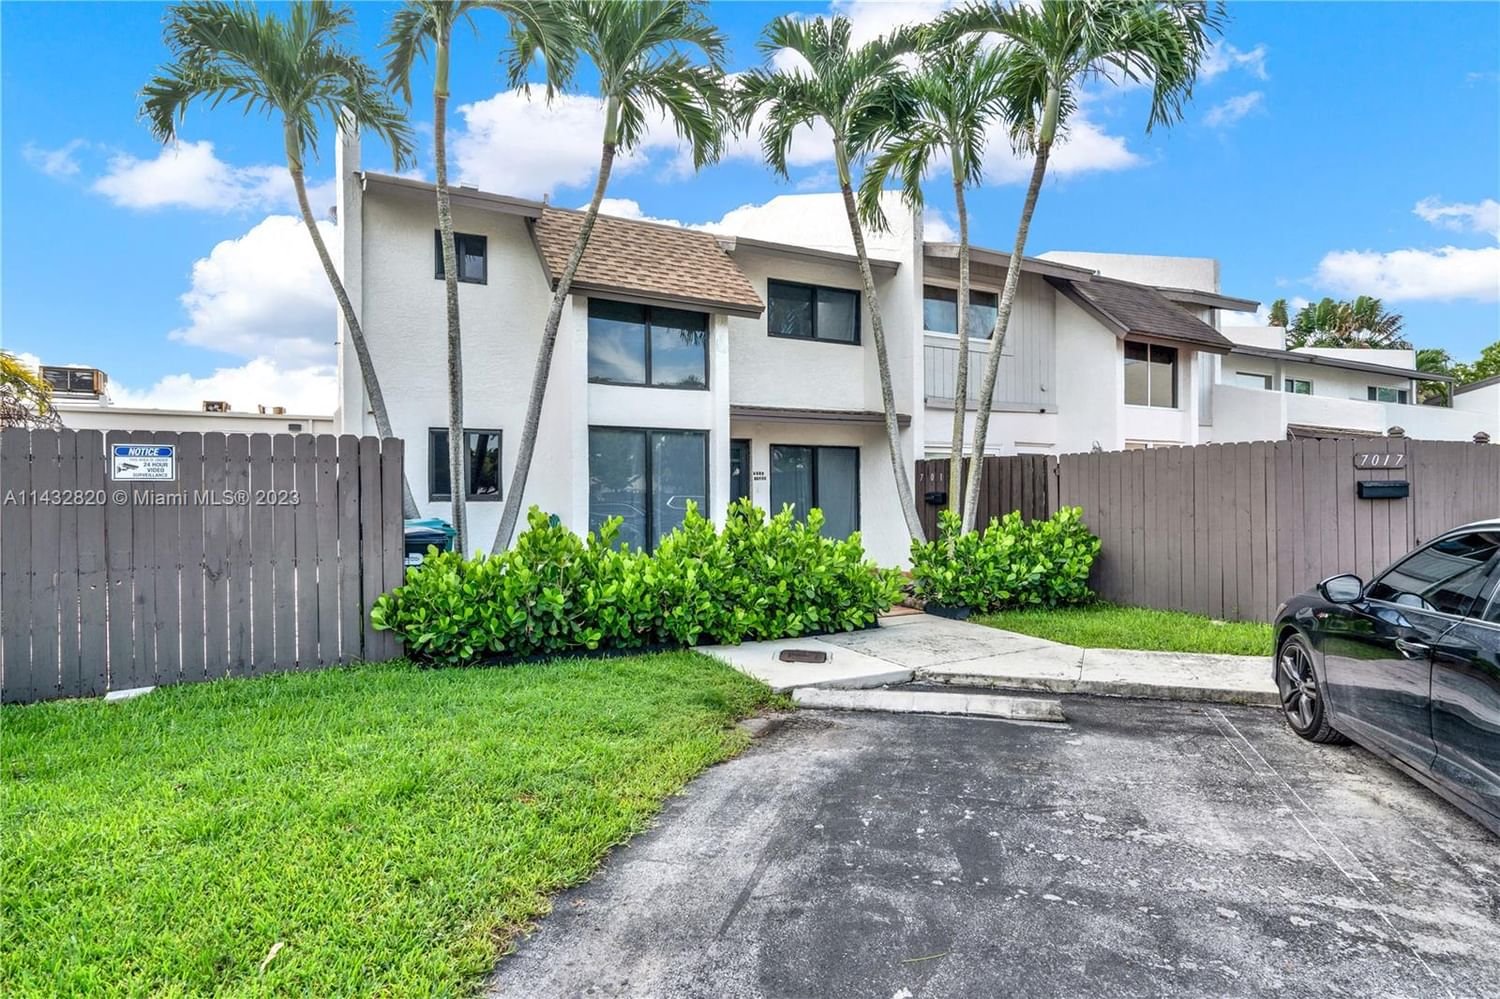 Real estate property located at 7013 109th Ct, Miami-Dade County, Miami, FL